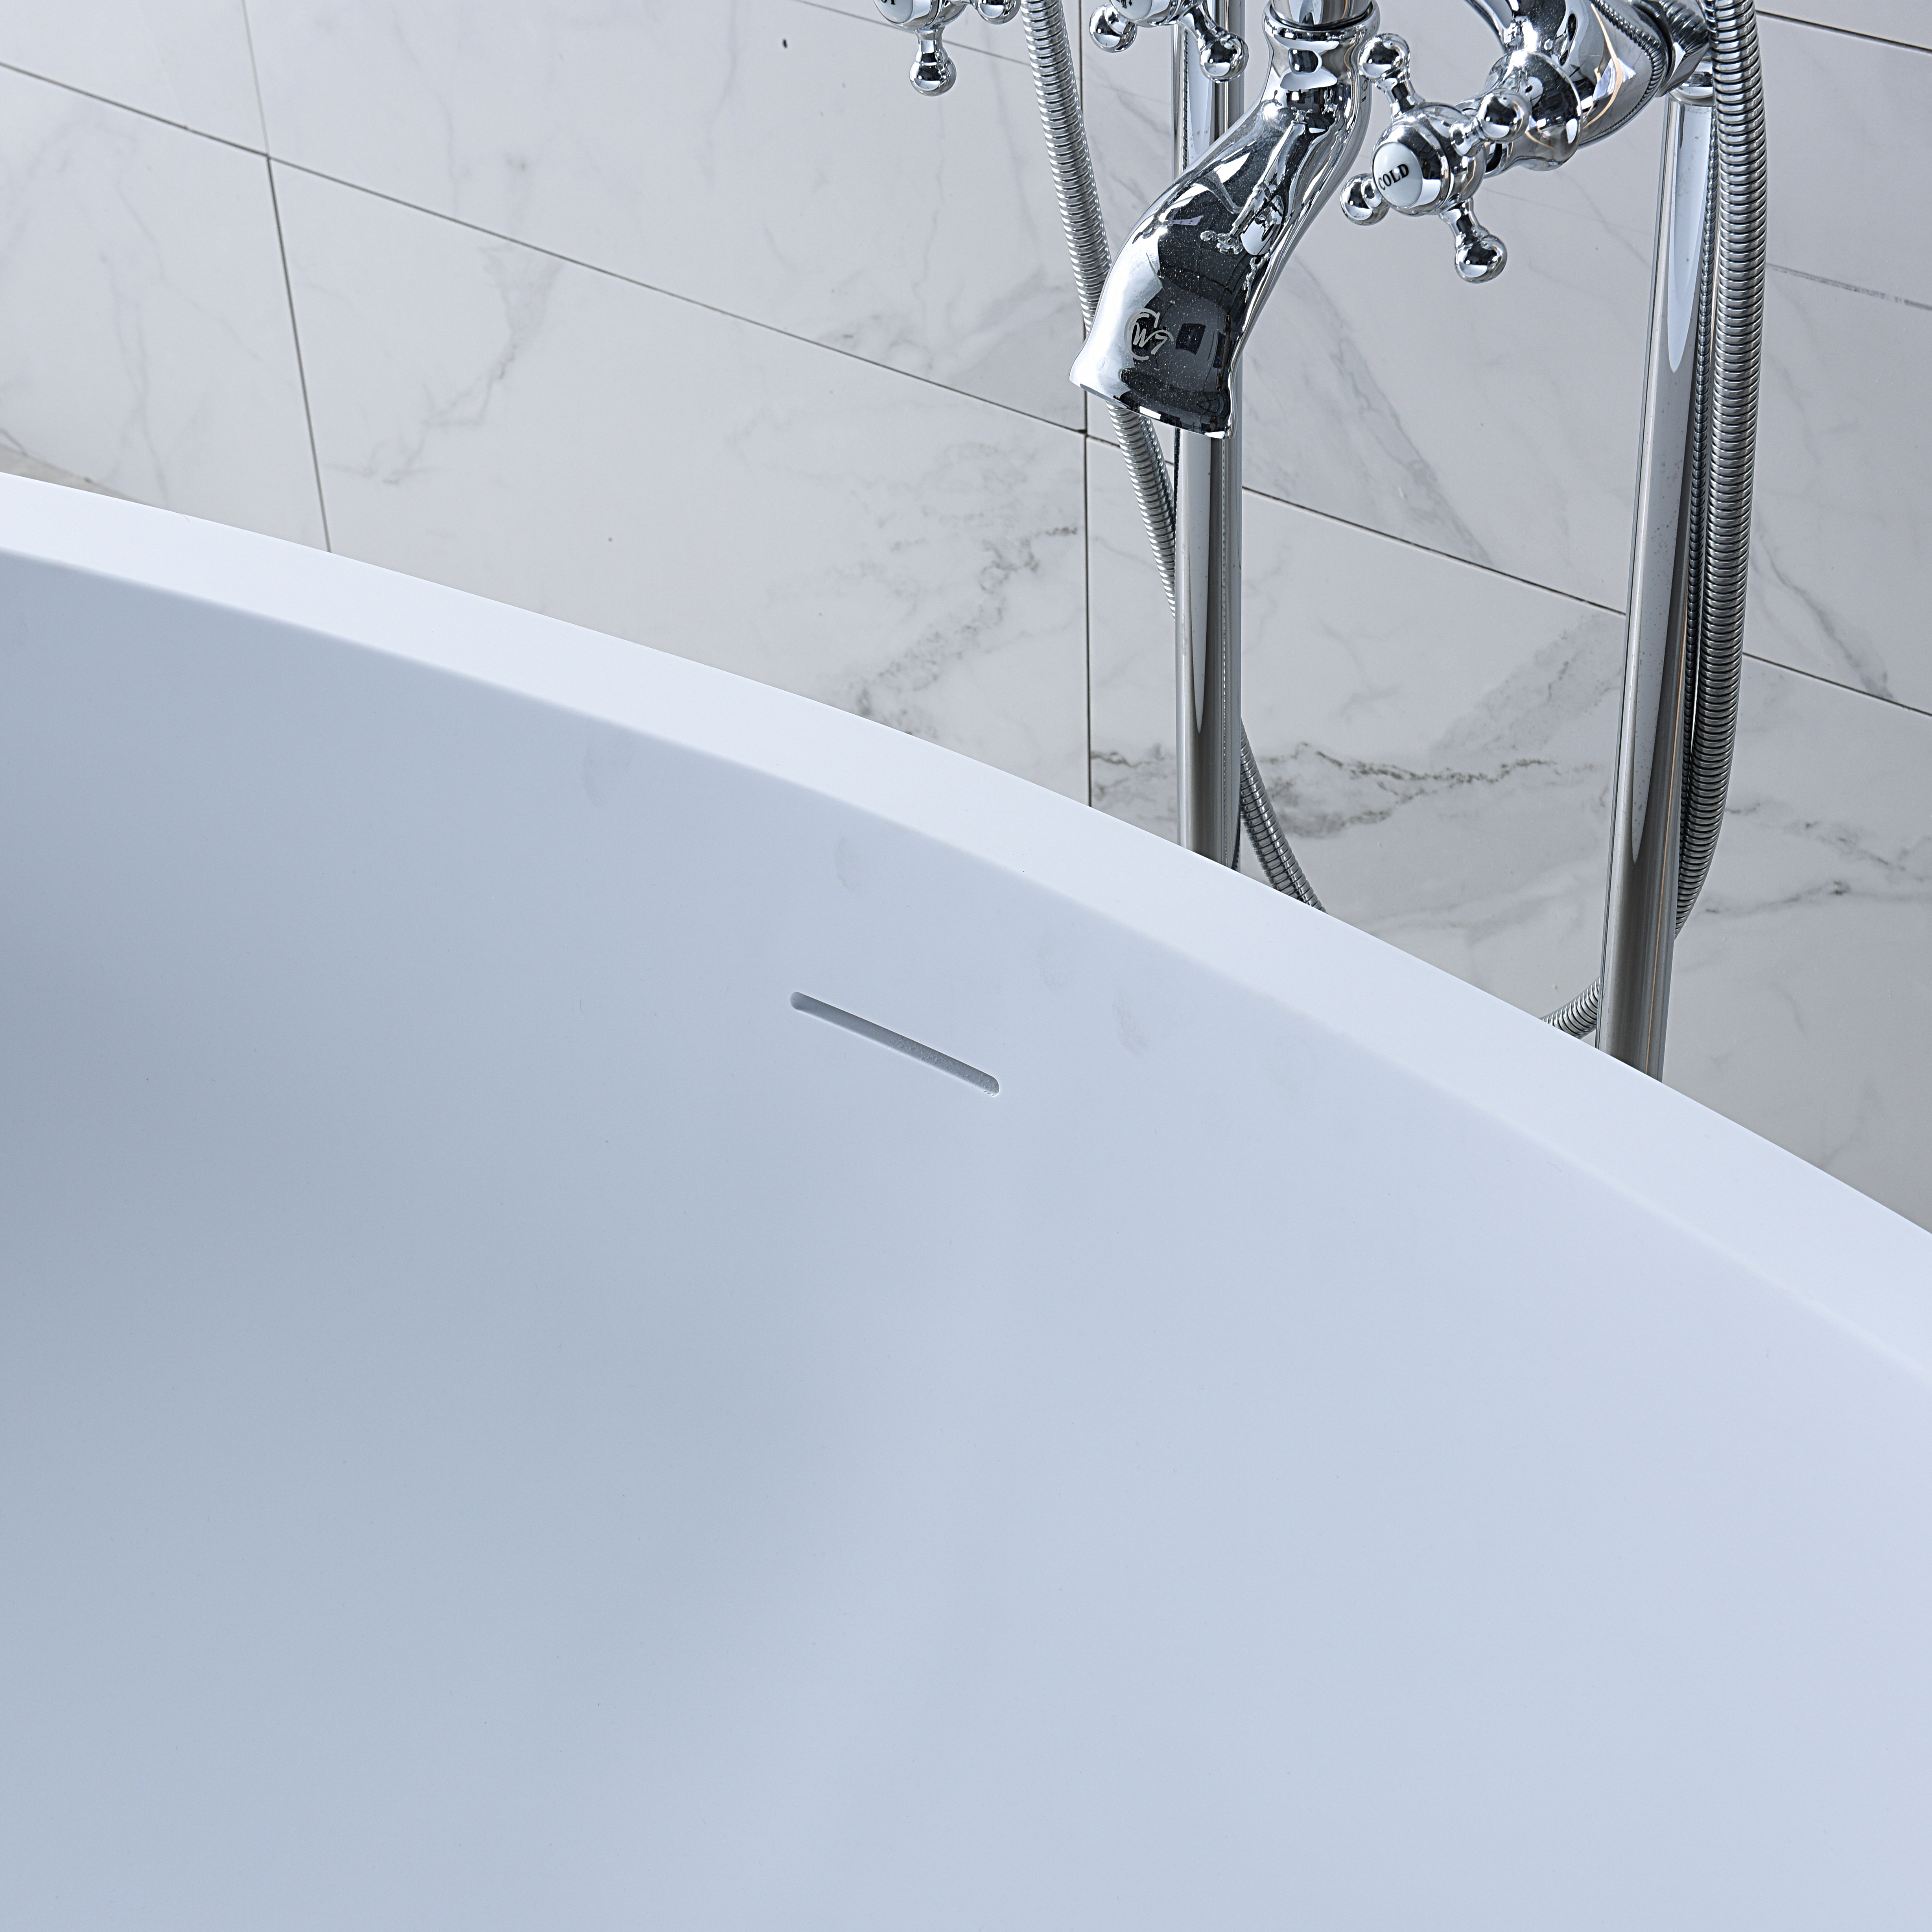 Abnormity shape adults matt white free standing solid surface bathtub